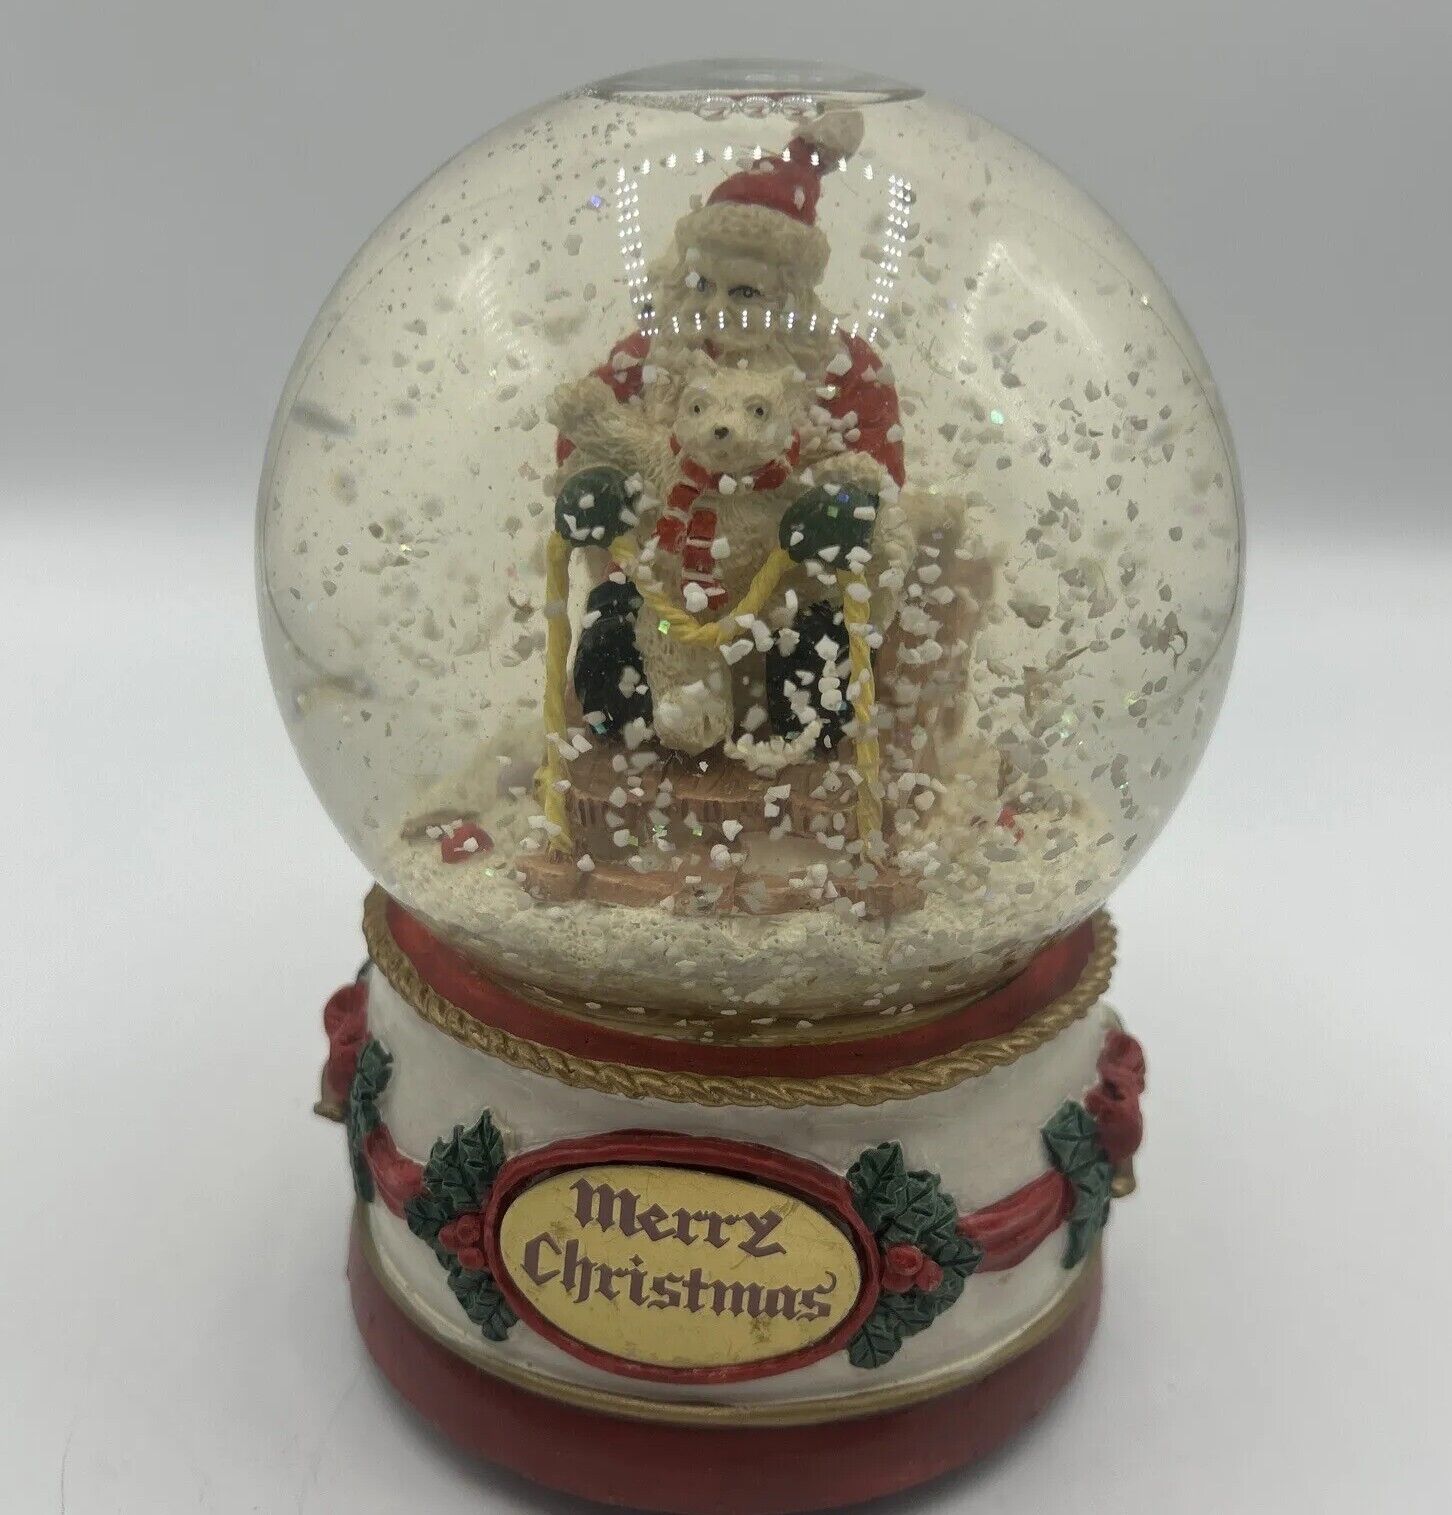 Vintage Merry Christmas Musical Snowglobe Santa Claus and Bears On Sleigh 